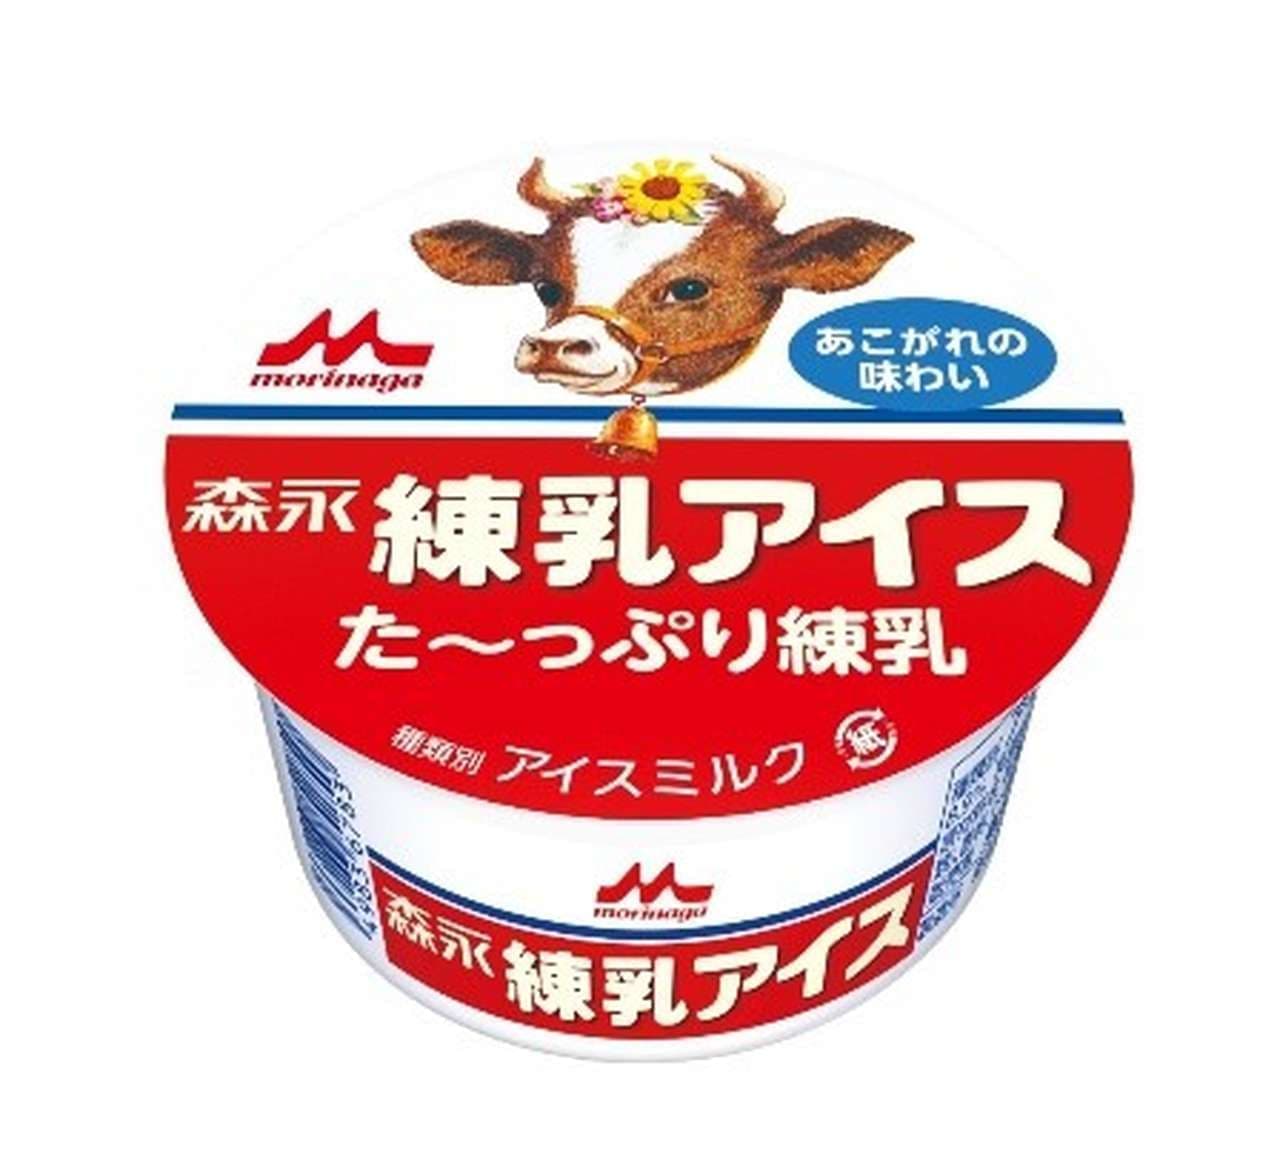 FamilyMart Morinaga Condensed Milk Collaboration